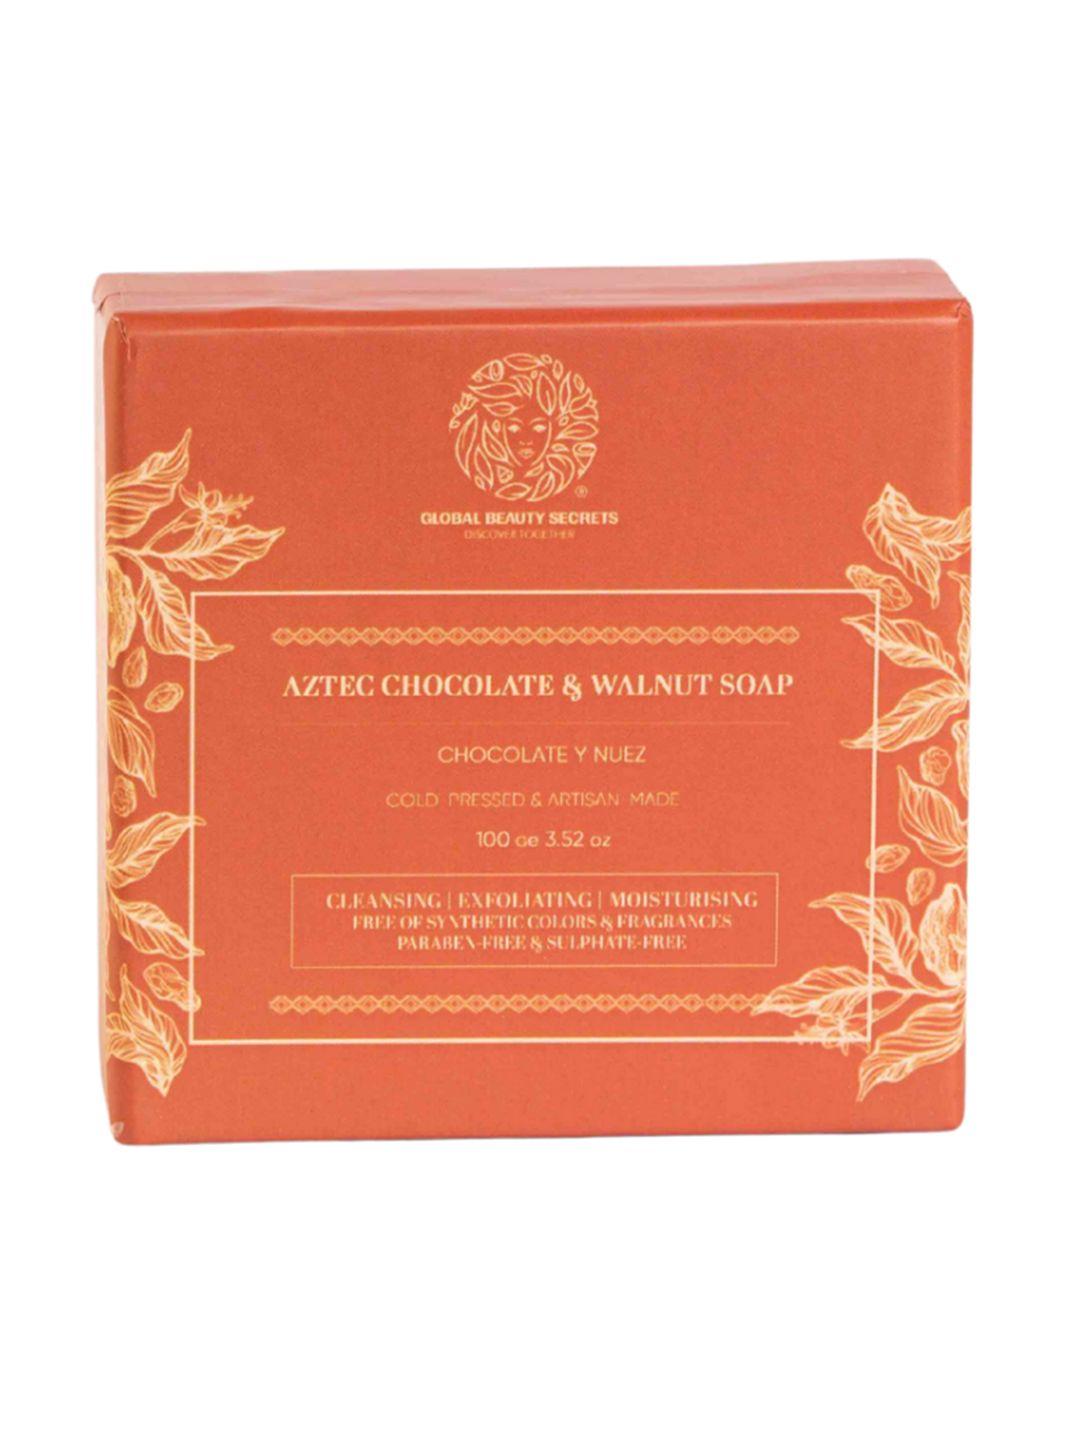 global beauty secrets aztec chocolate & walnut soap with shea butter - 100 g